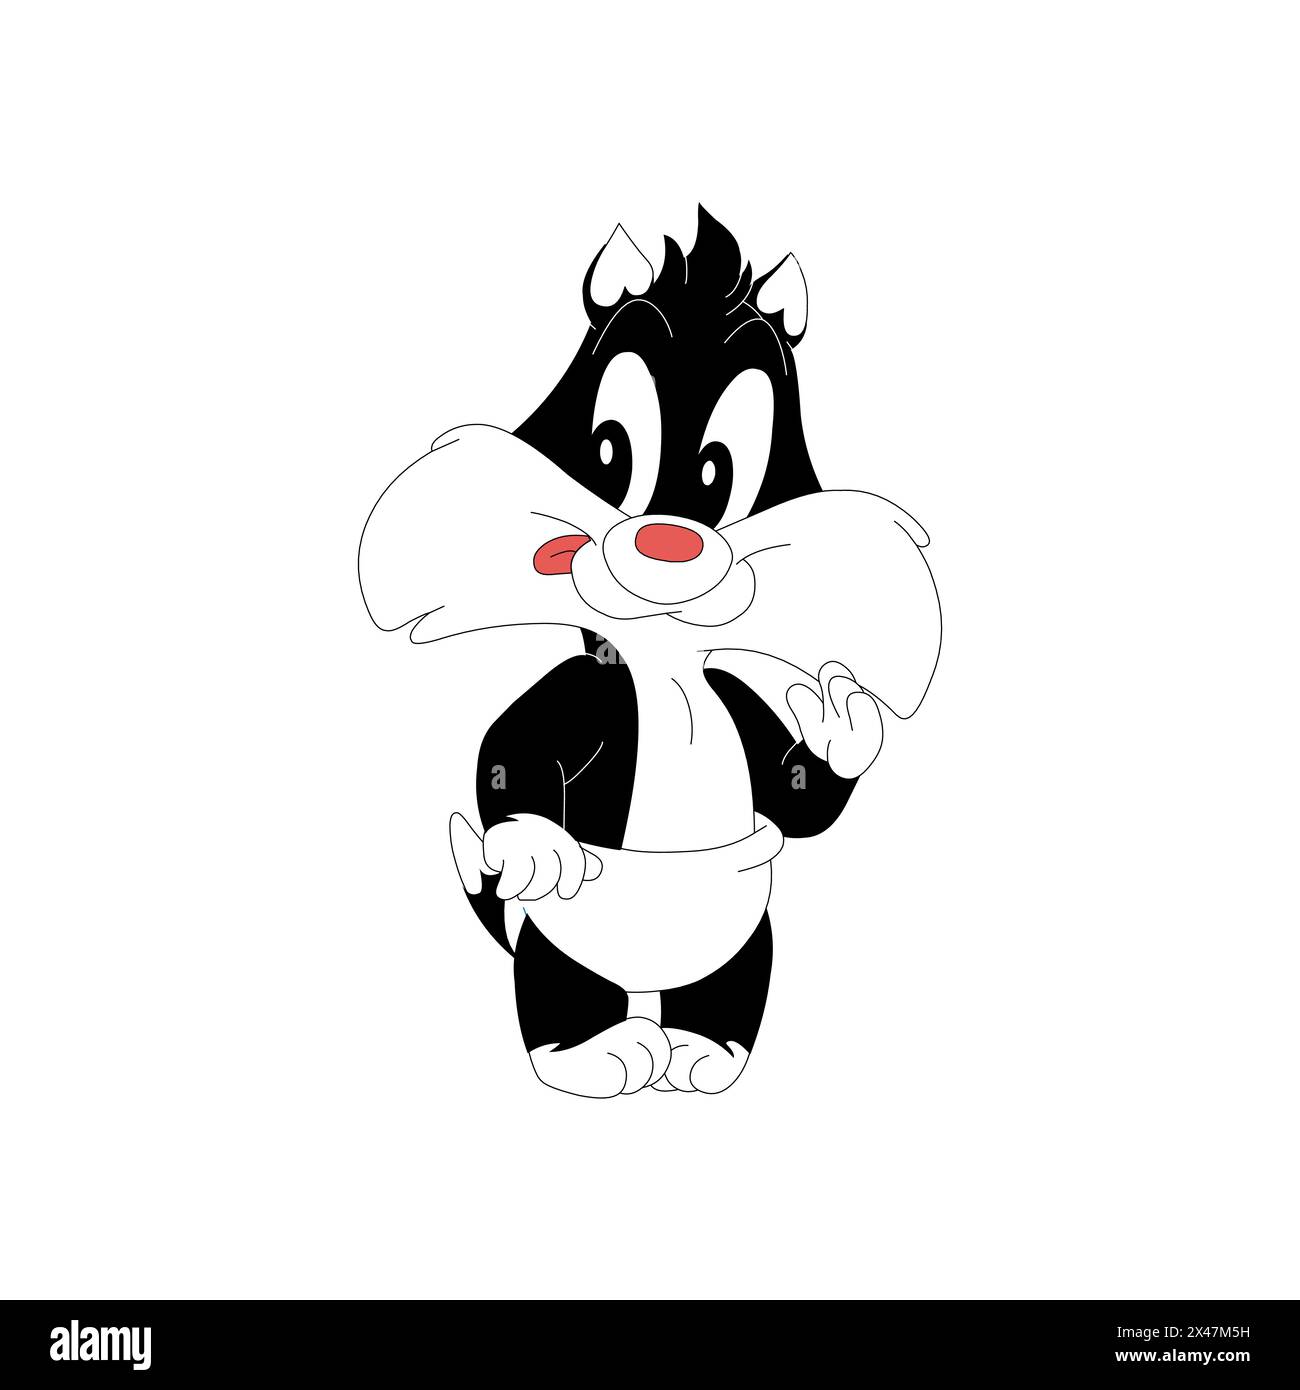 Looney tunes cute character vector illustration Stock Vector